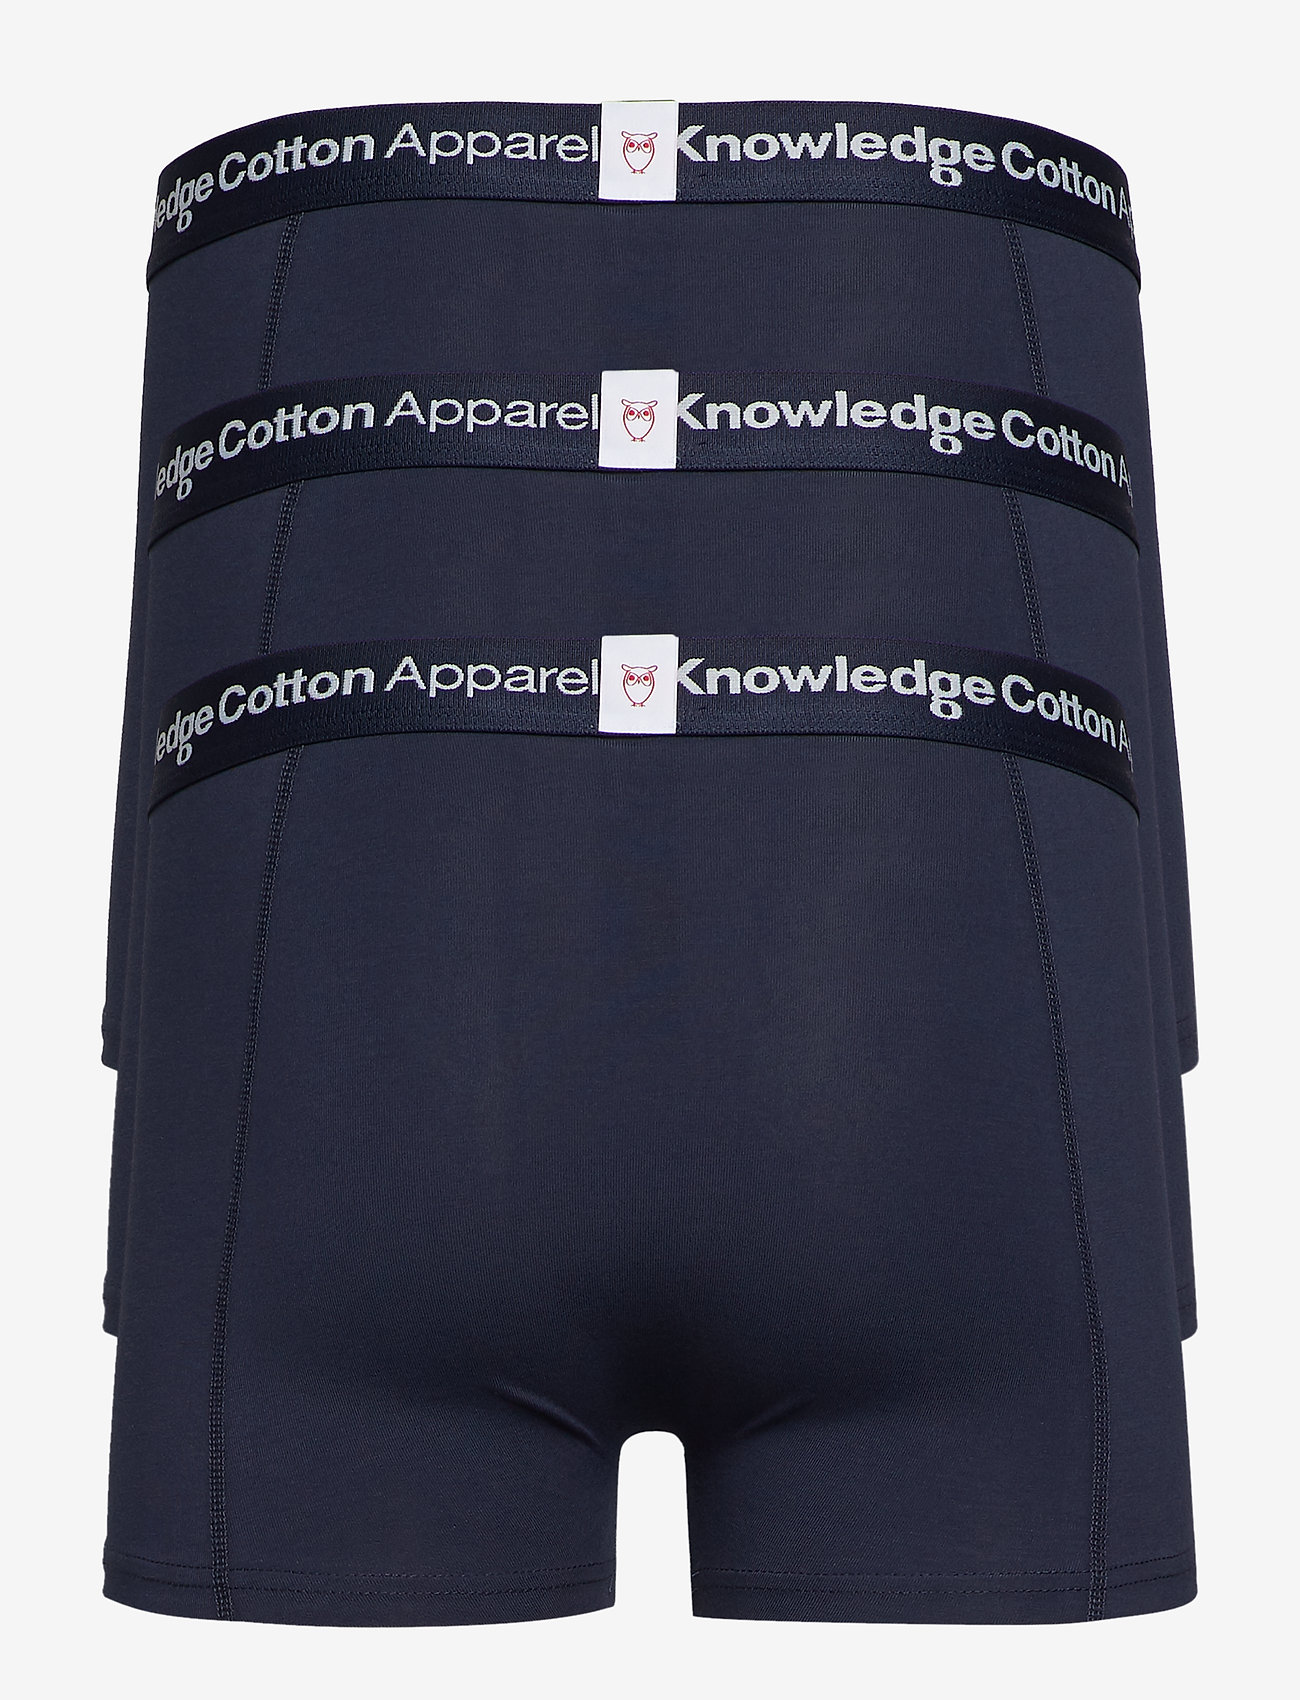 Knowledge Cotton Apparel - 3-pack underwear - GOTS/Vegan - lowest prices - total eclipse - 1